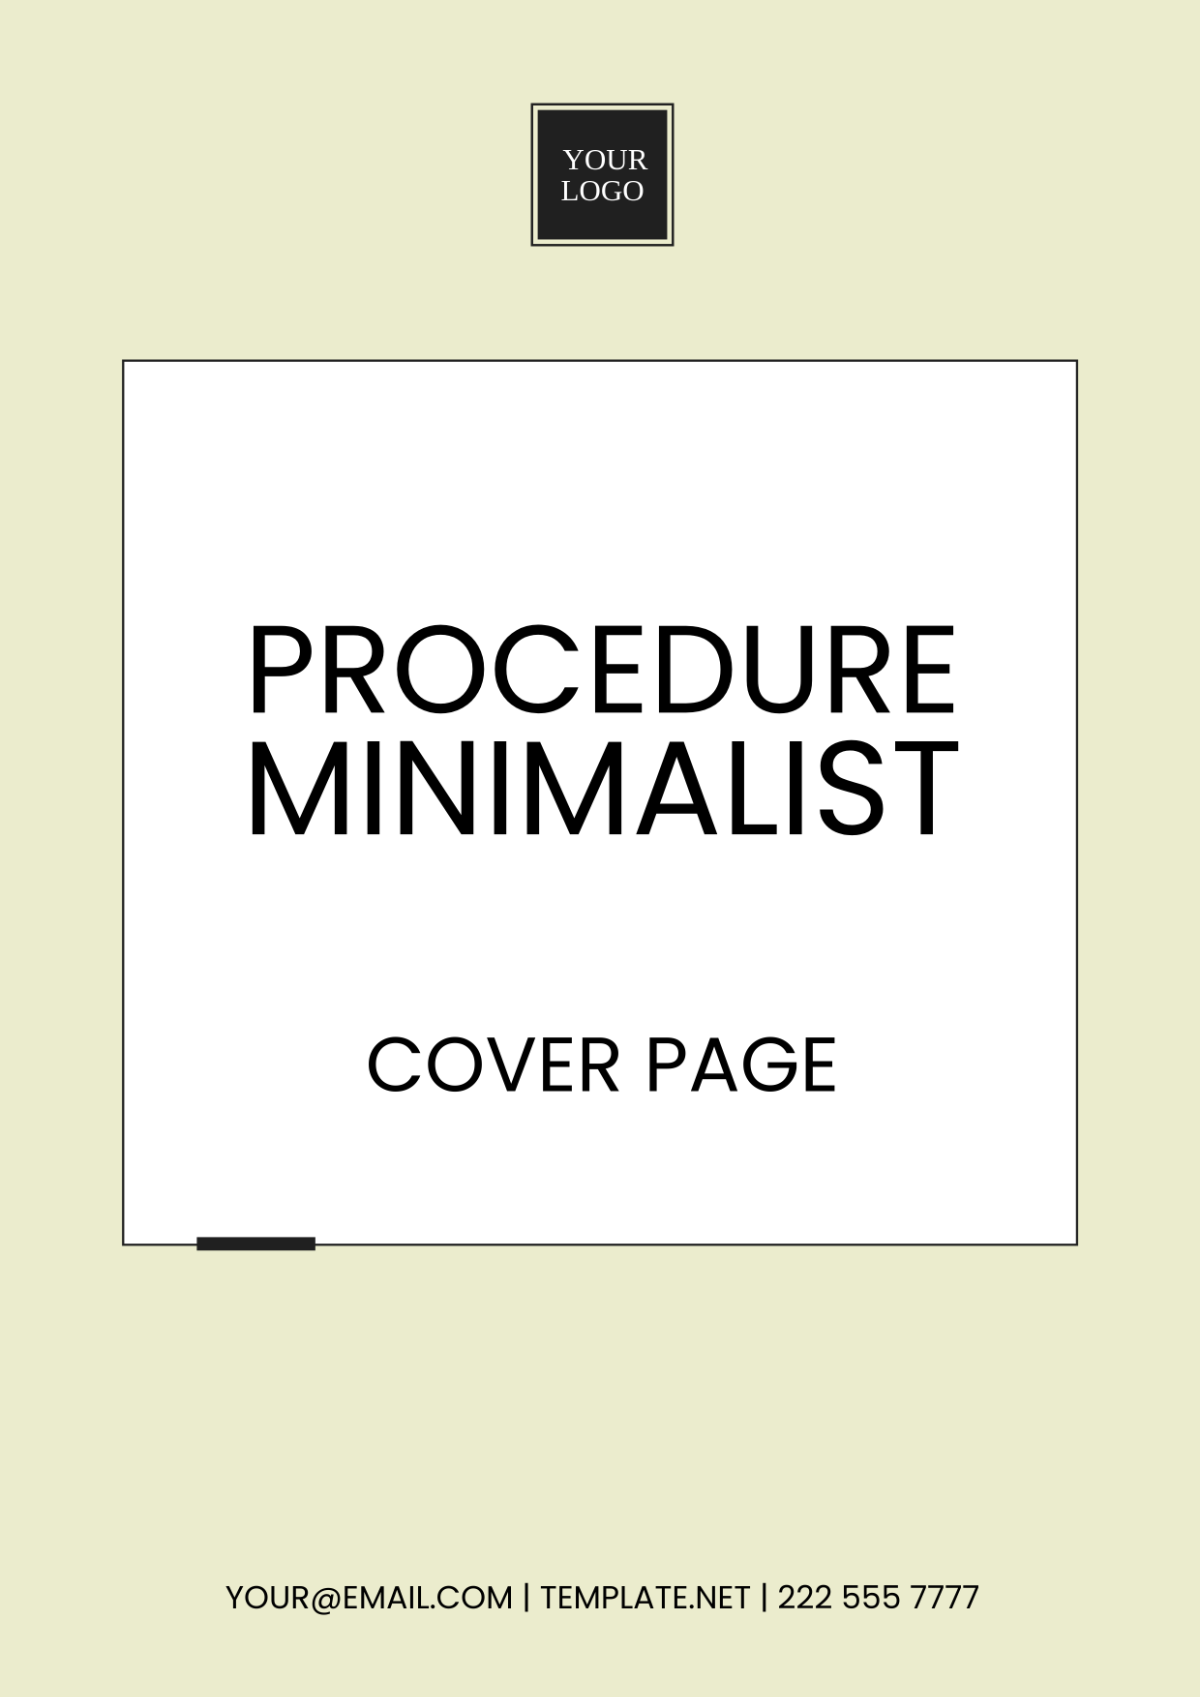 Procedure Minimalist Cover Page Template